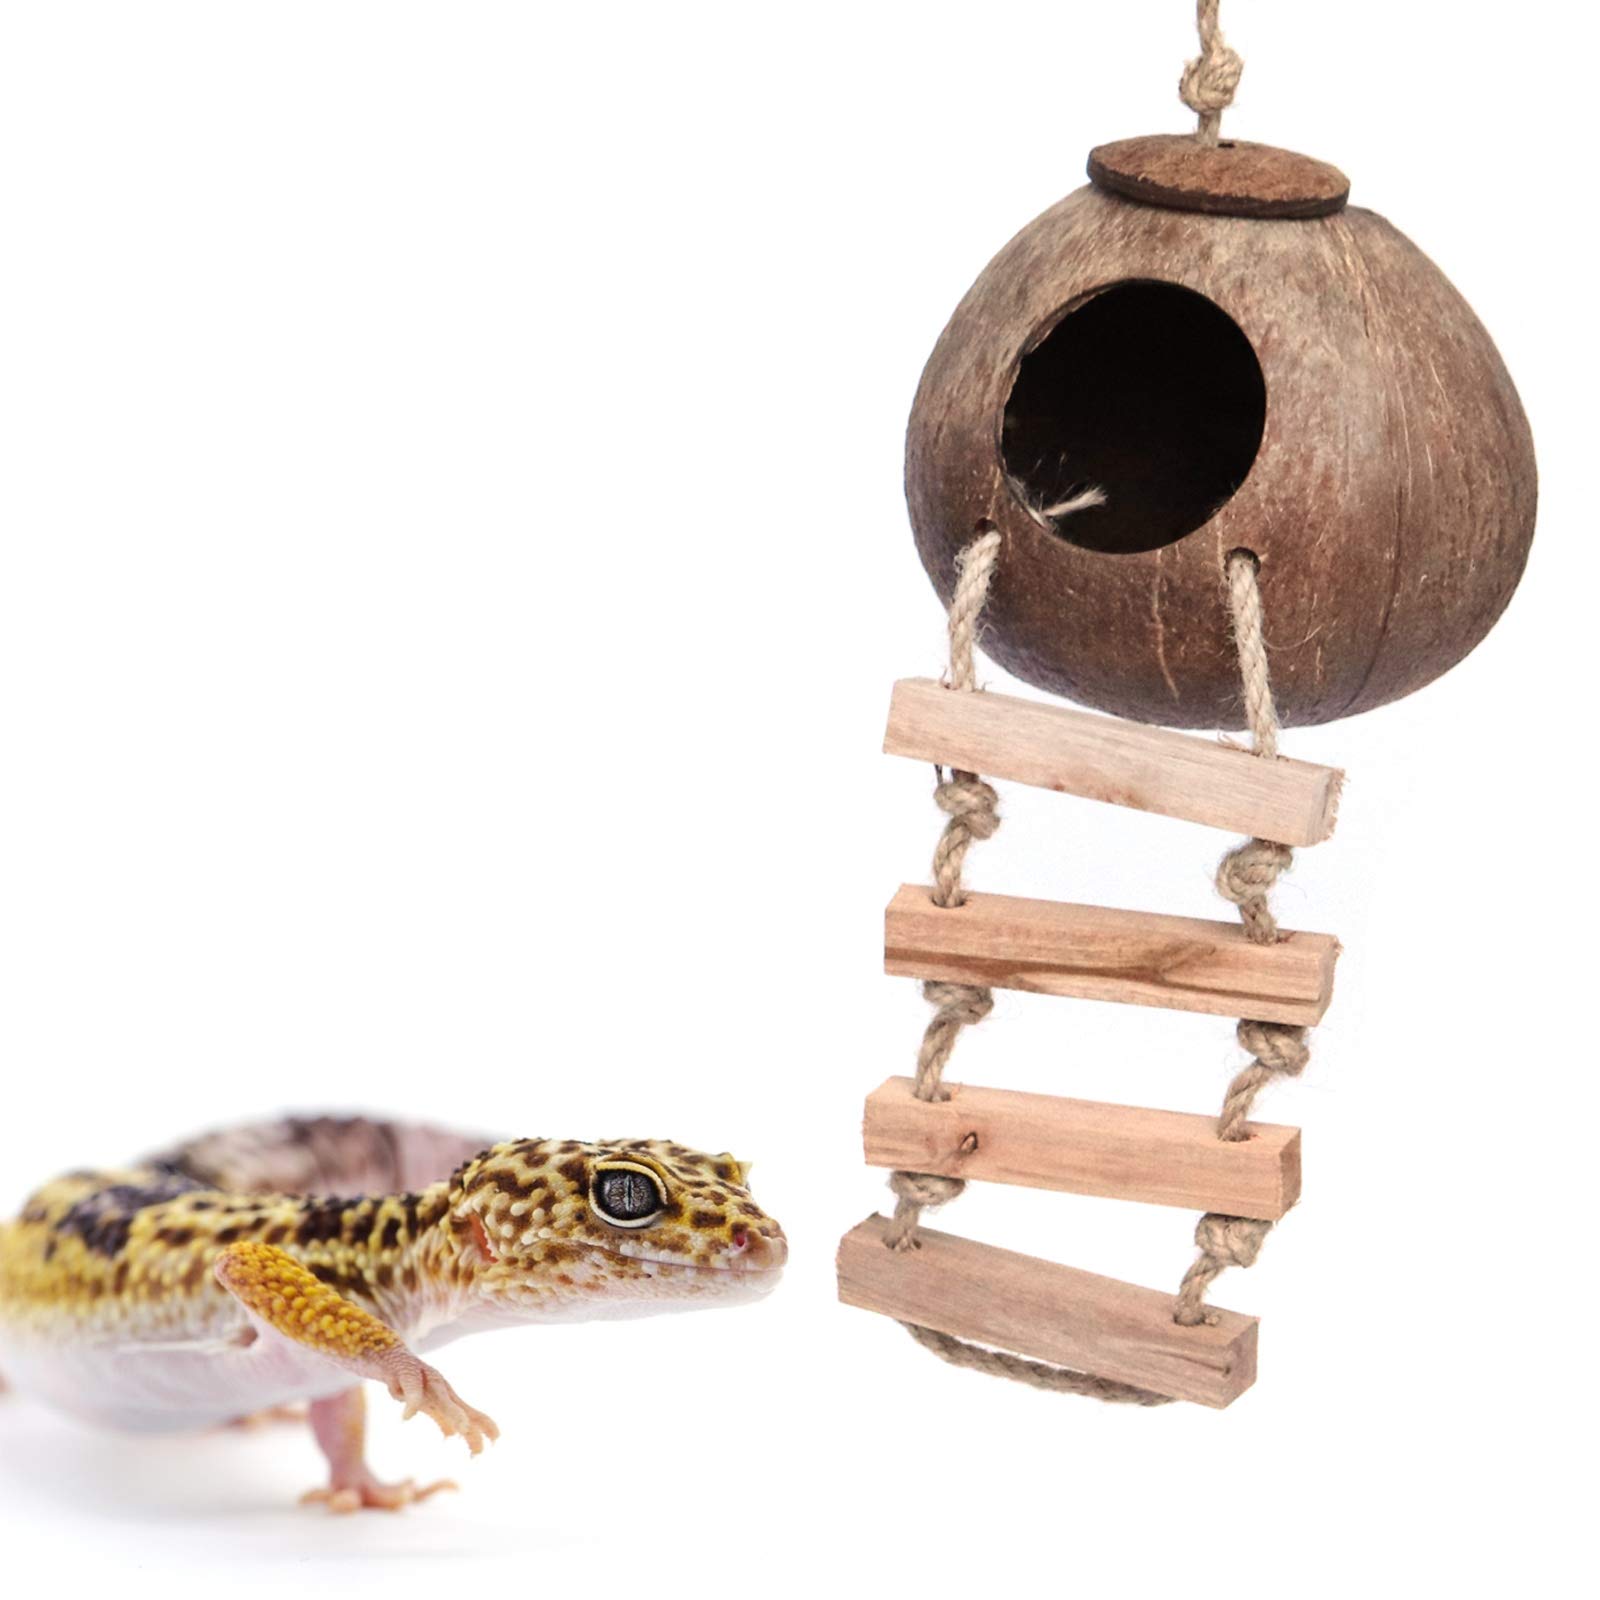 Is Coconut Fiber Good for Leopard Geckos